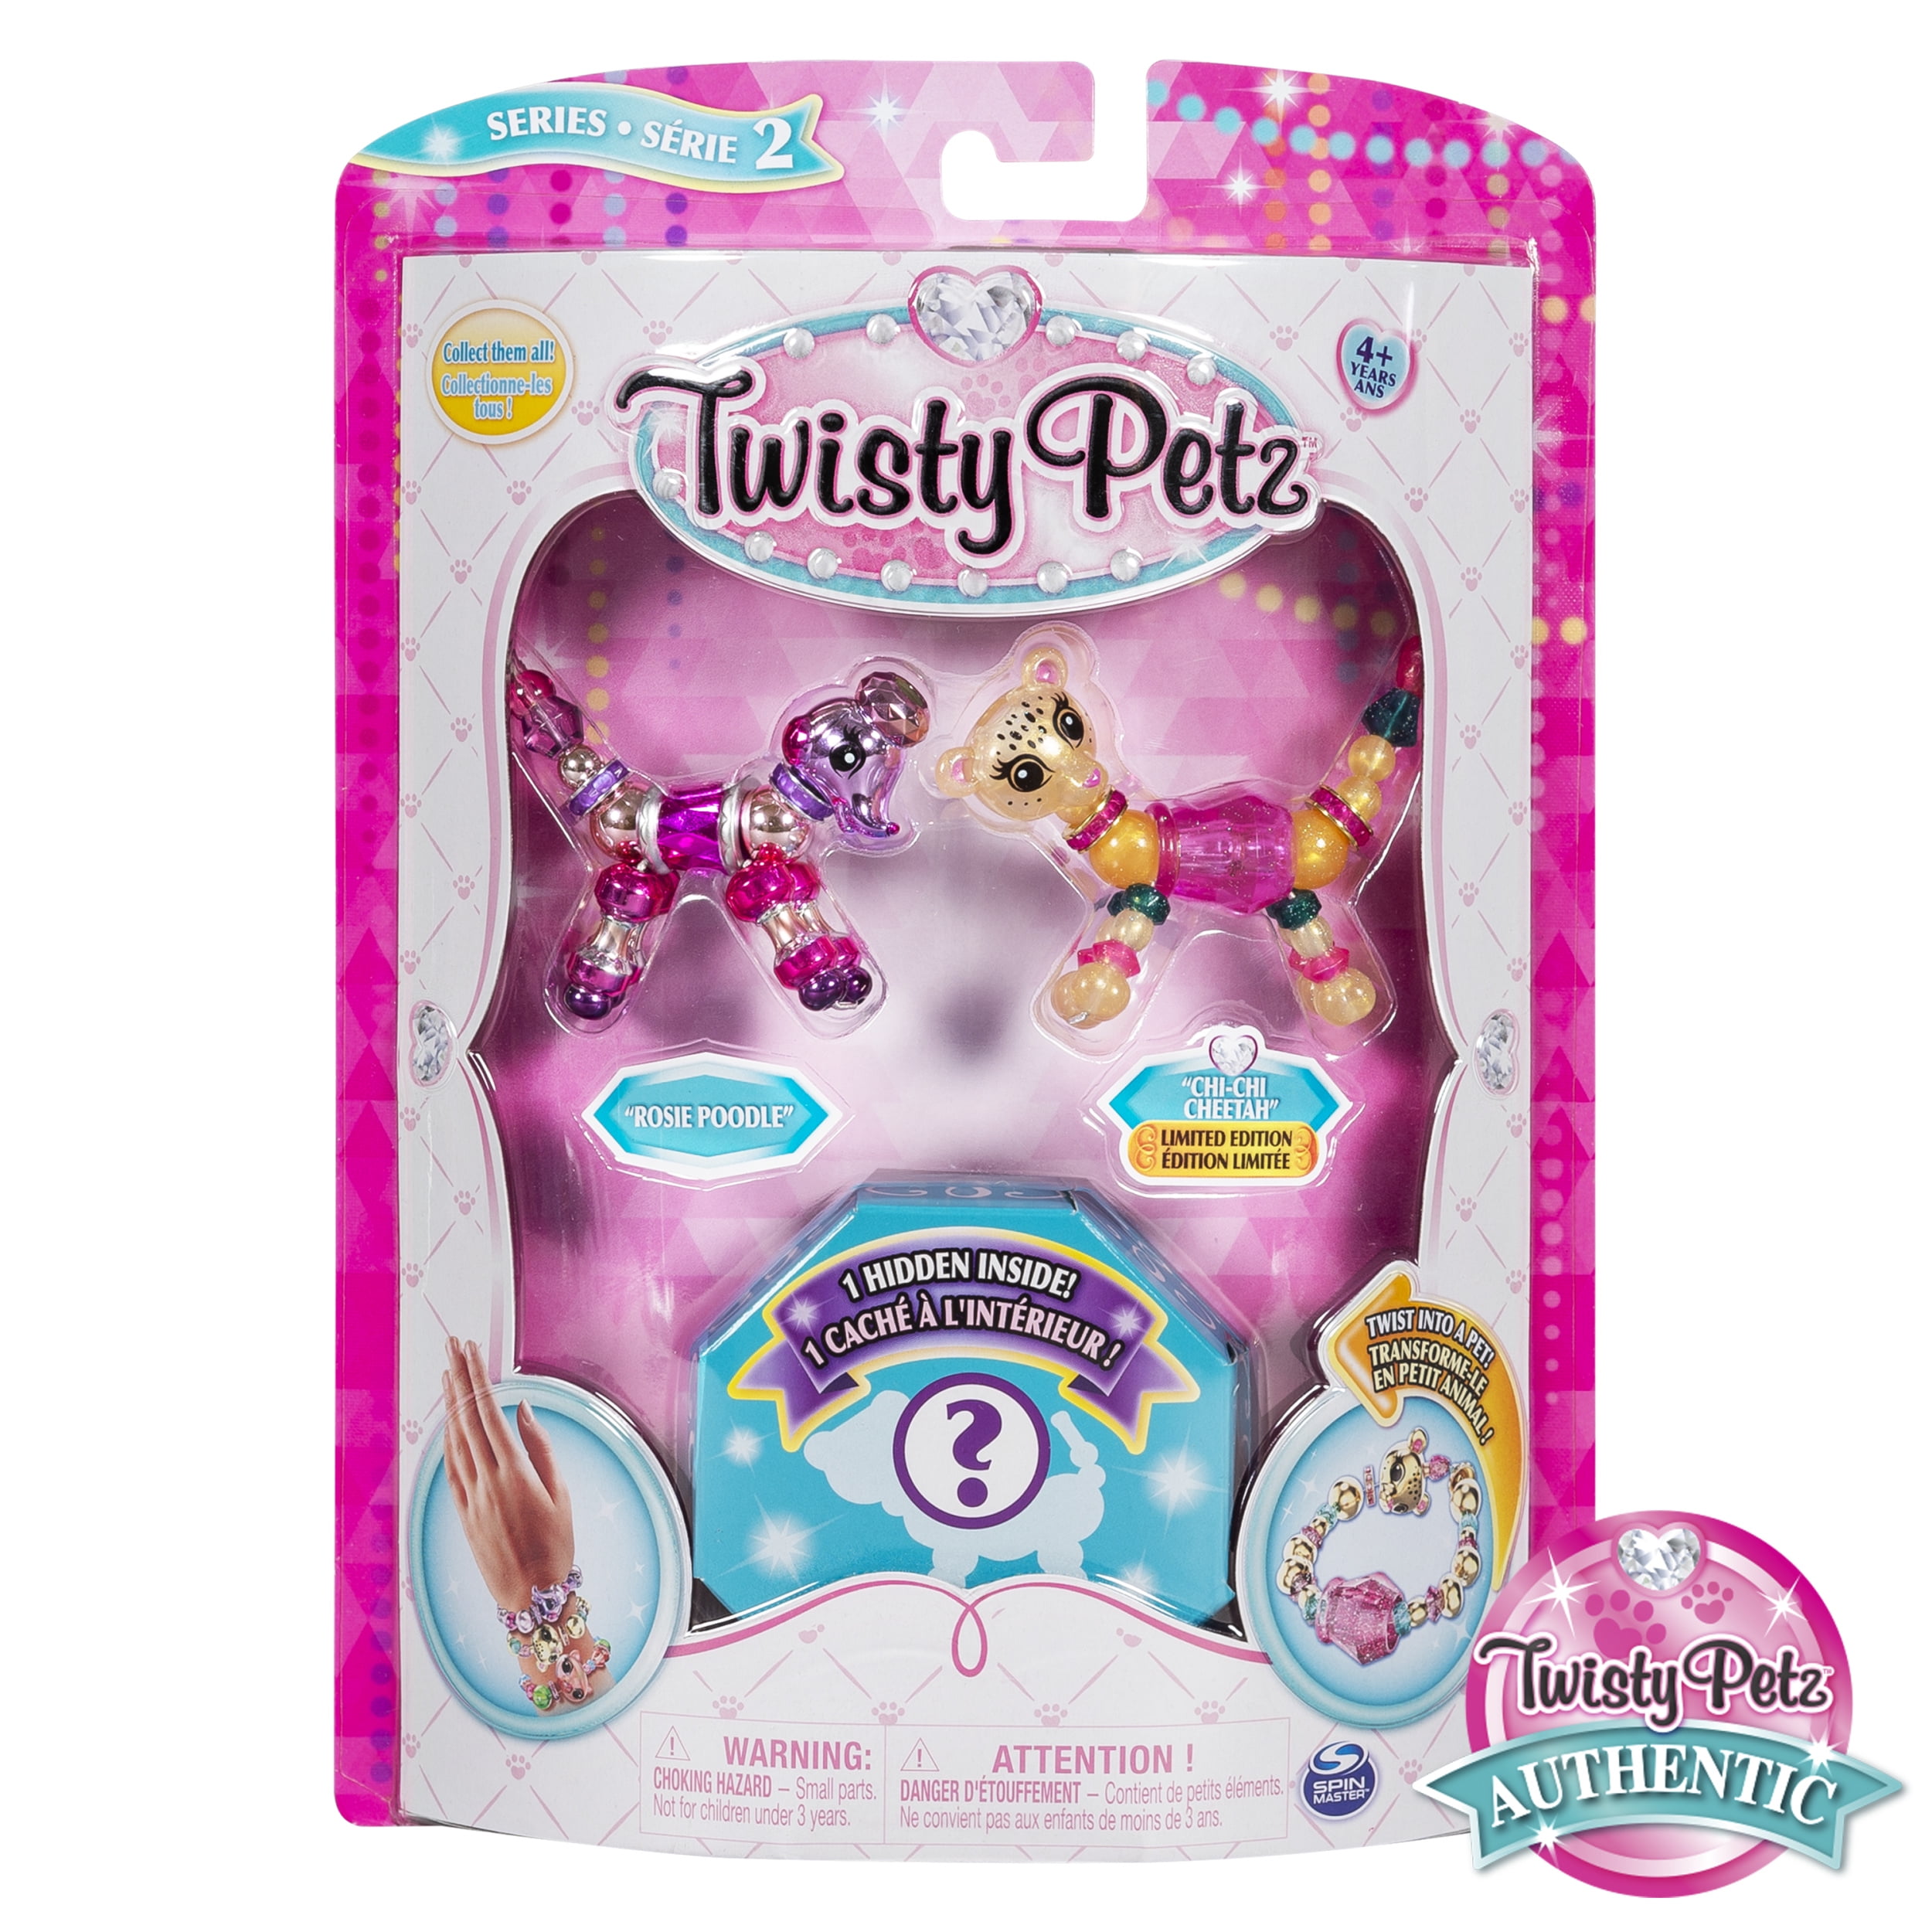 NEW Twisty Petz Series 2 3-Pack Rosie Poodle Chi-Chi Cheetah Bracelet Lip Gloss